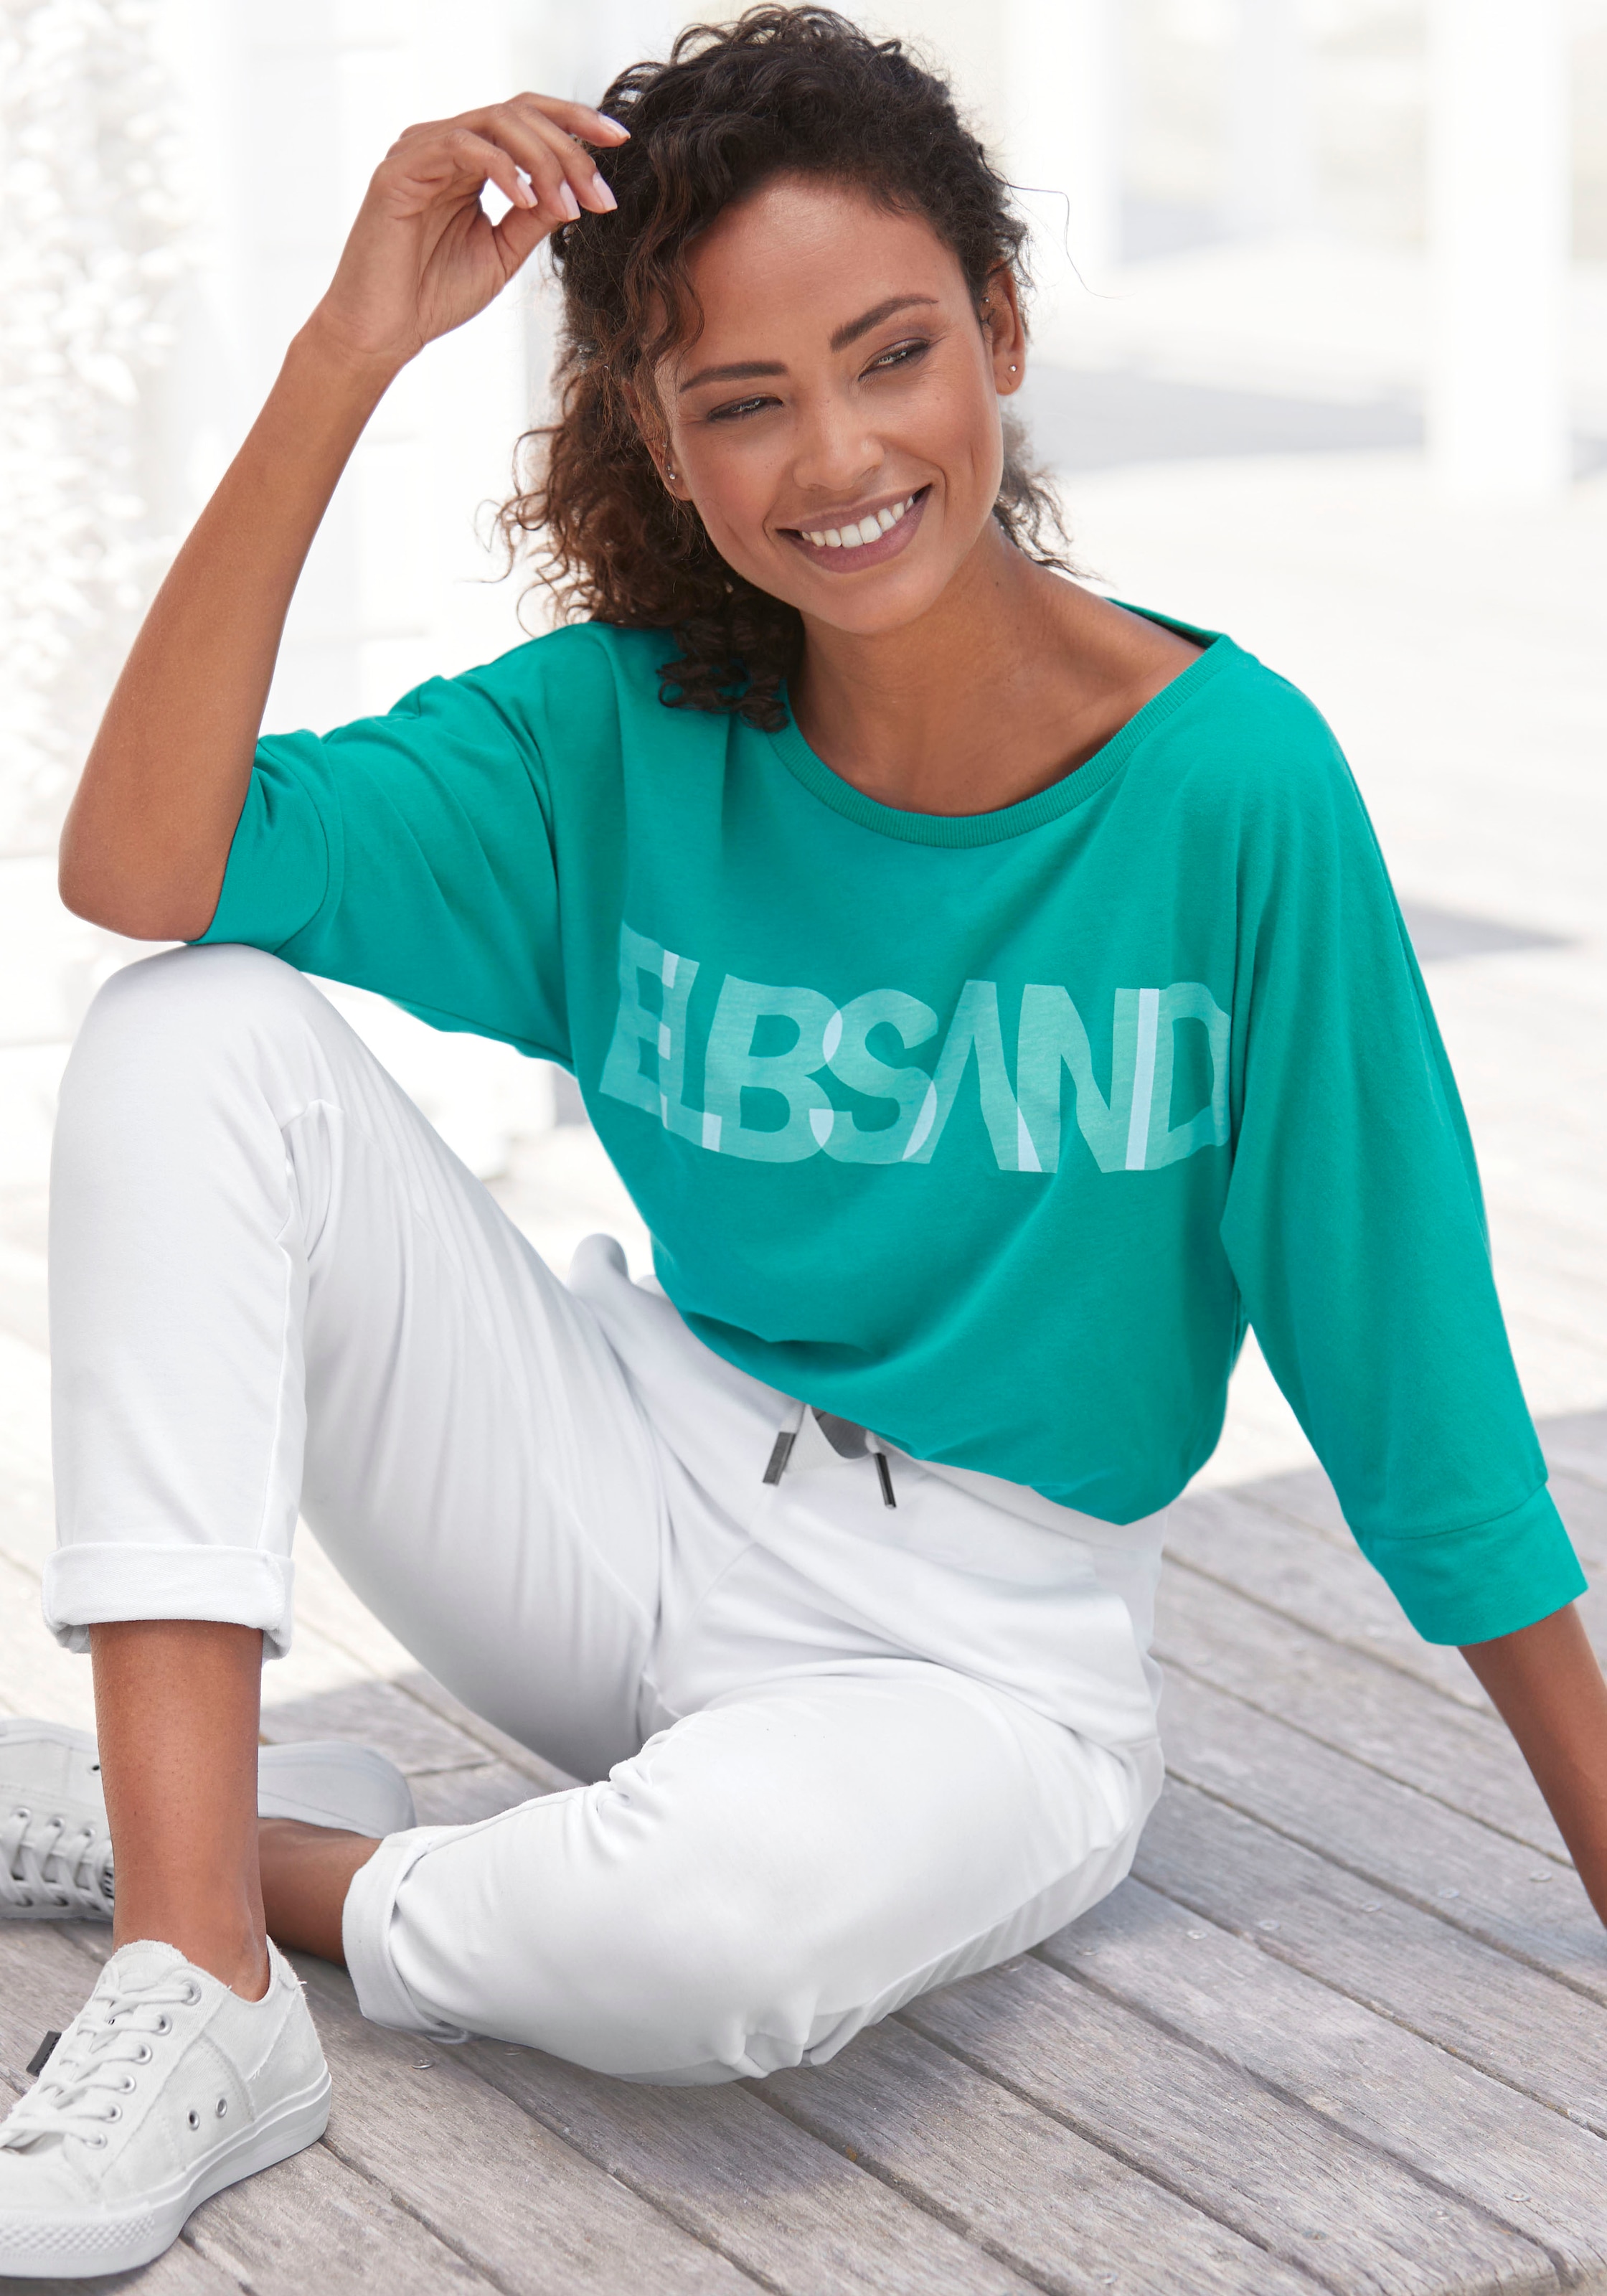 Elbsand 3/4-Arm-Shirt, mit Logodruck, lockere Baumwoll-Mix, Passform shoppen